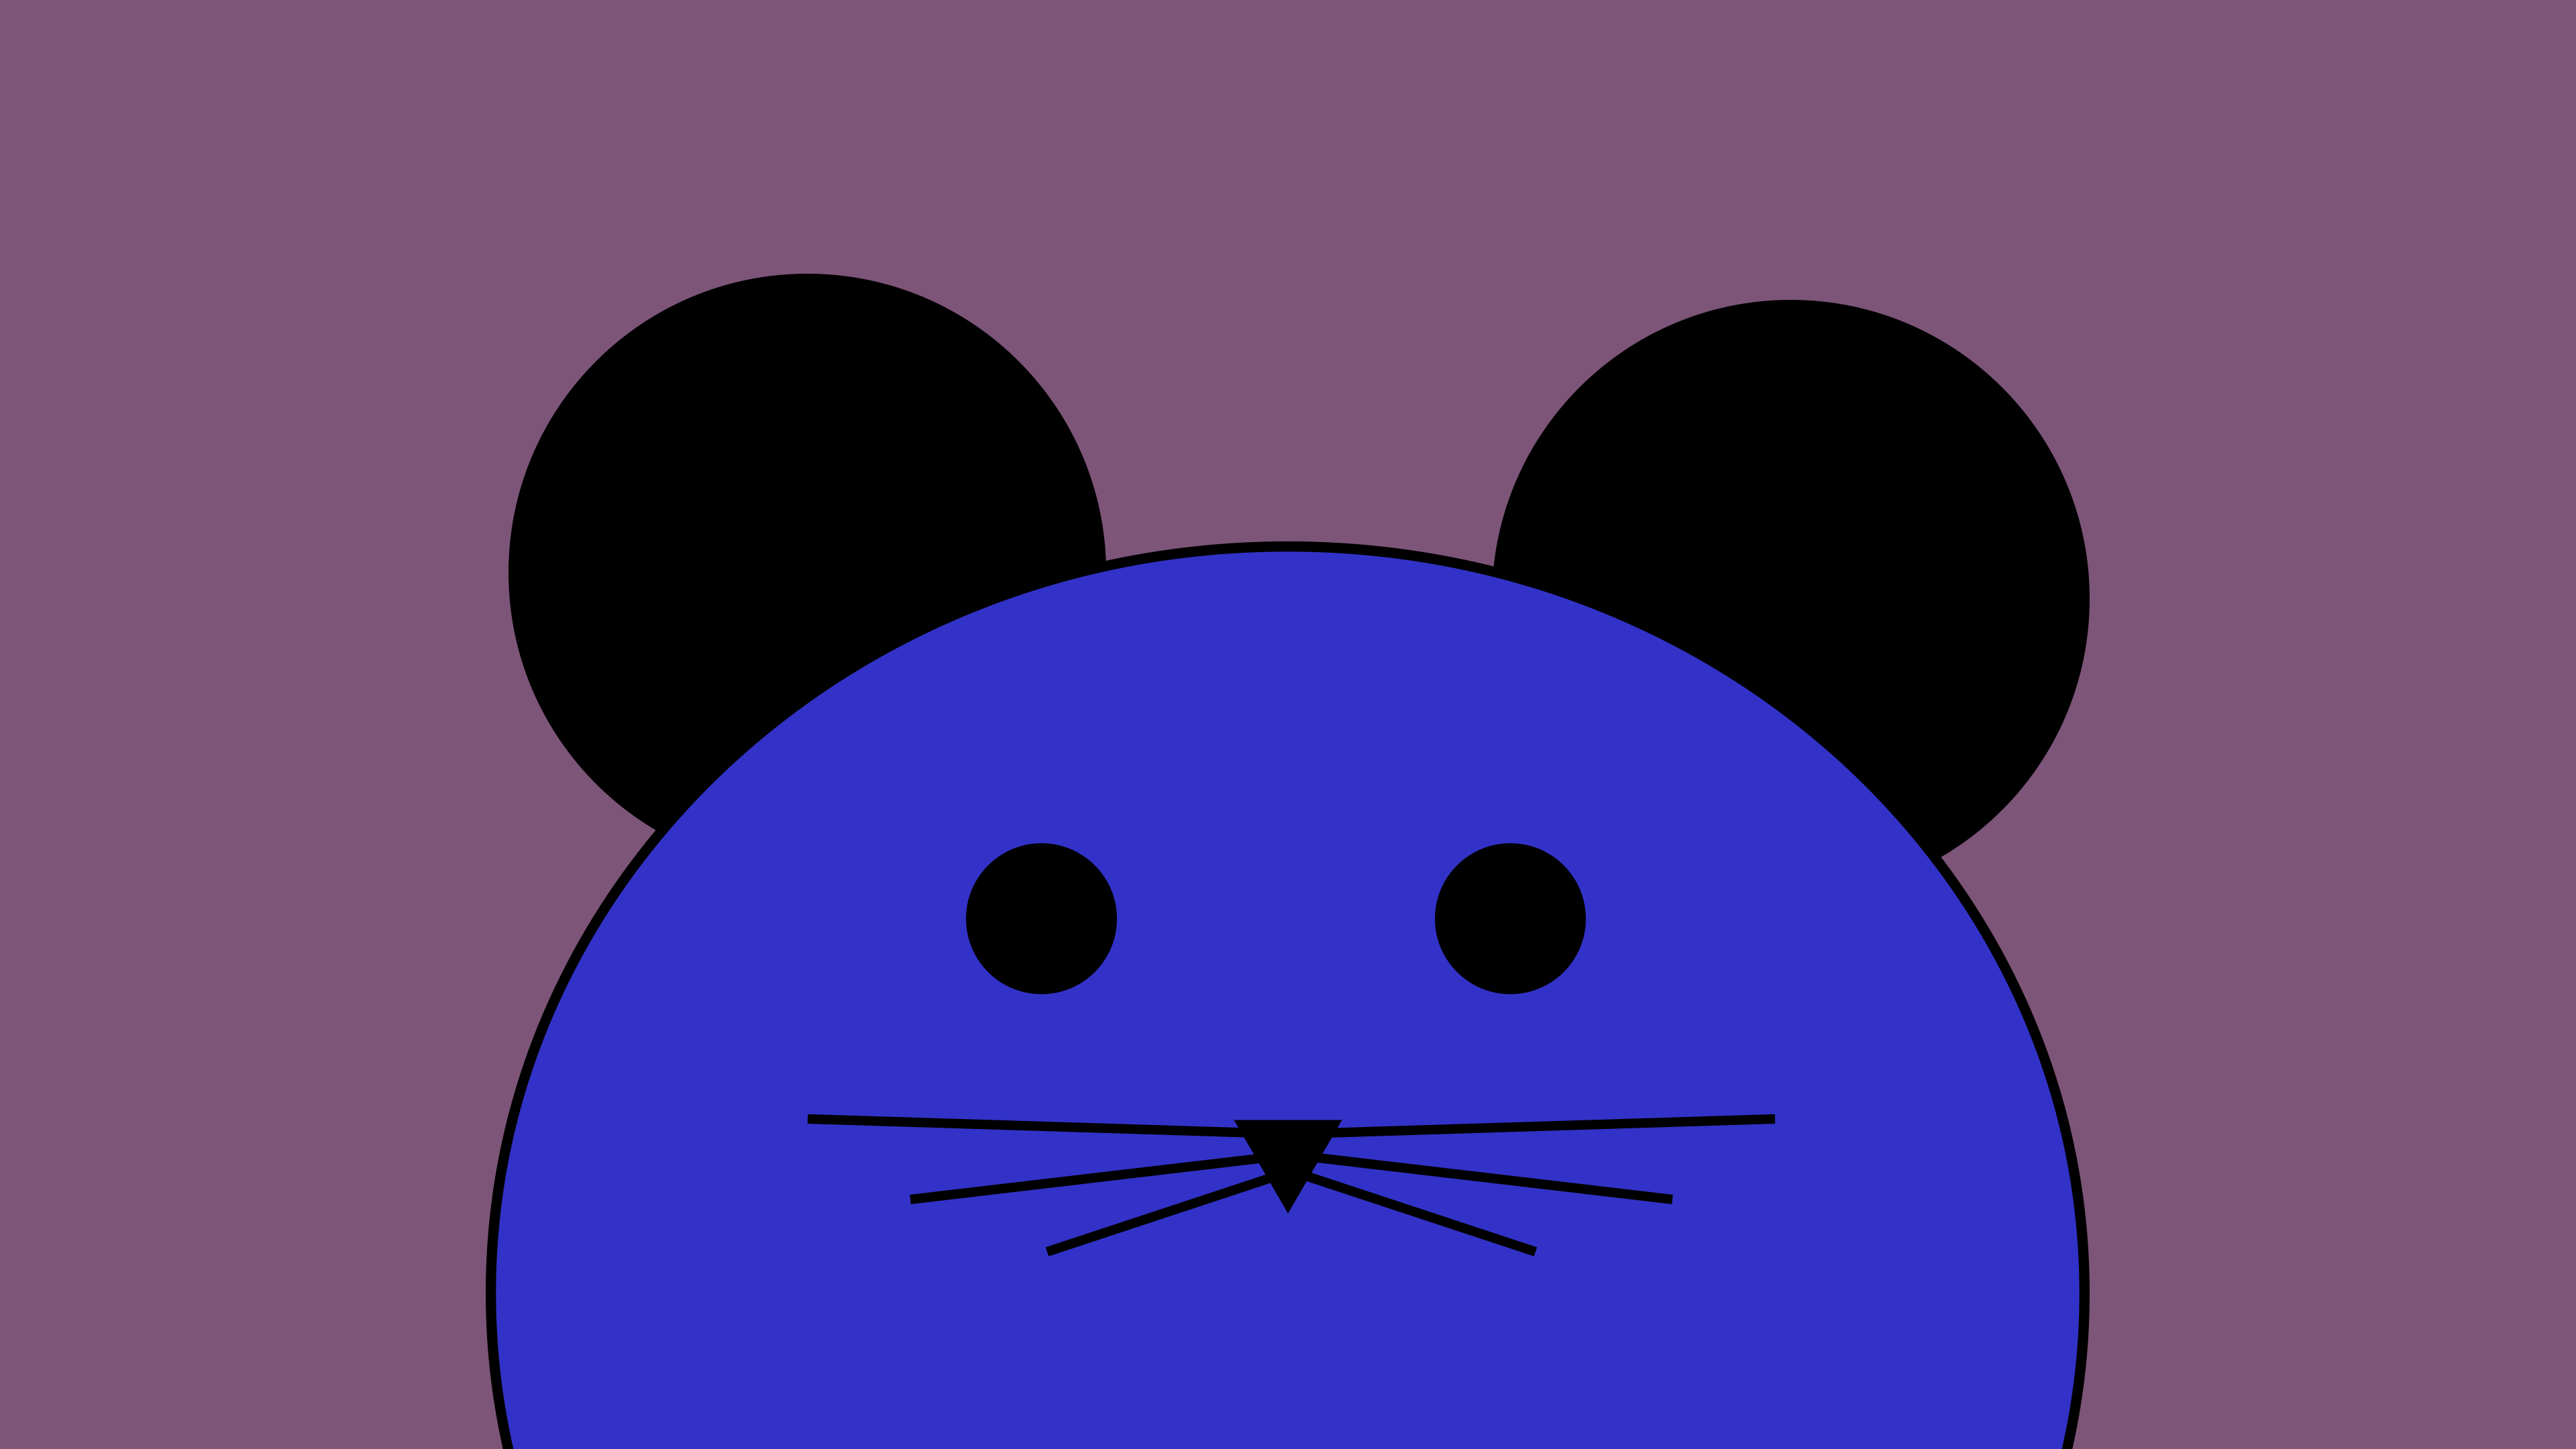 Descarga gratuita de fondo de pantalla para móvil de Dibujos Animados, Animales, Ratón.